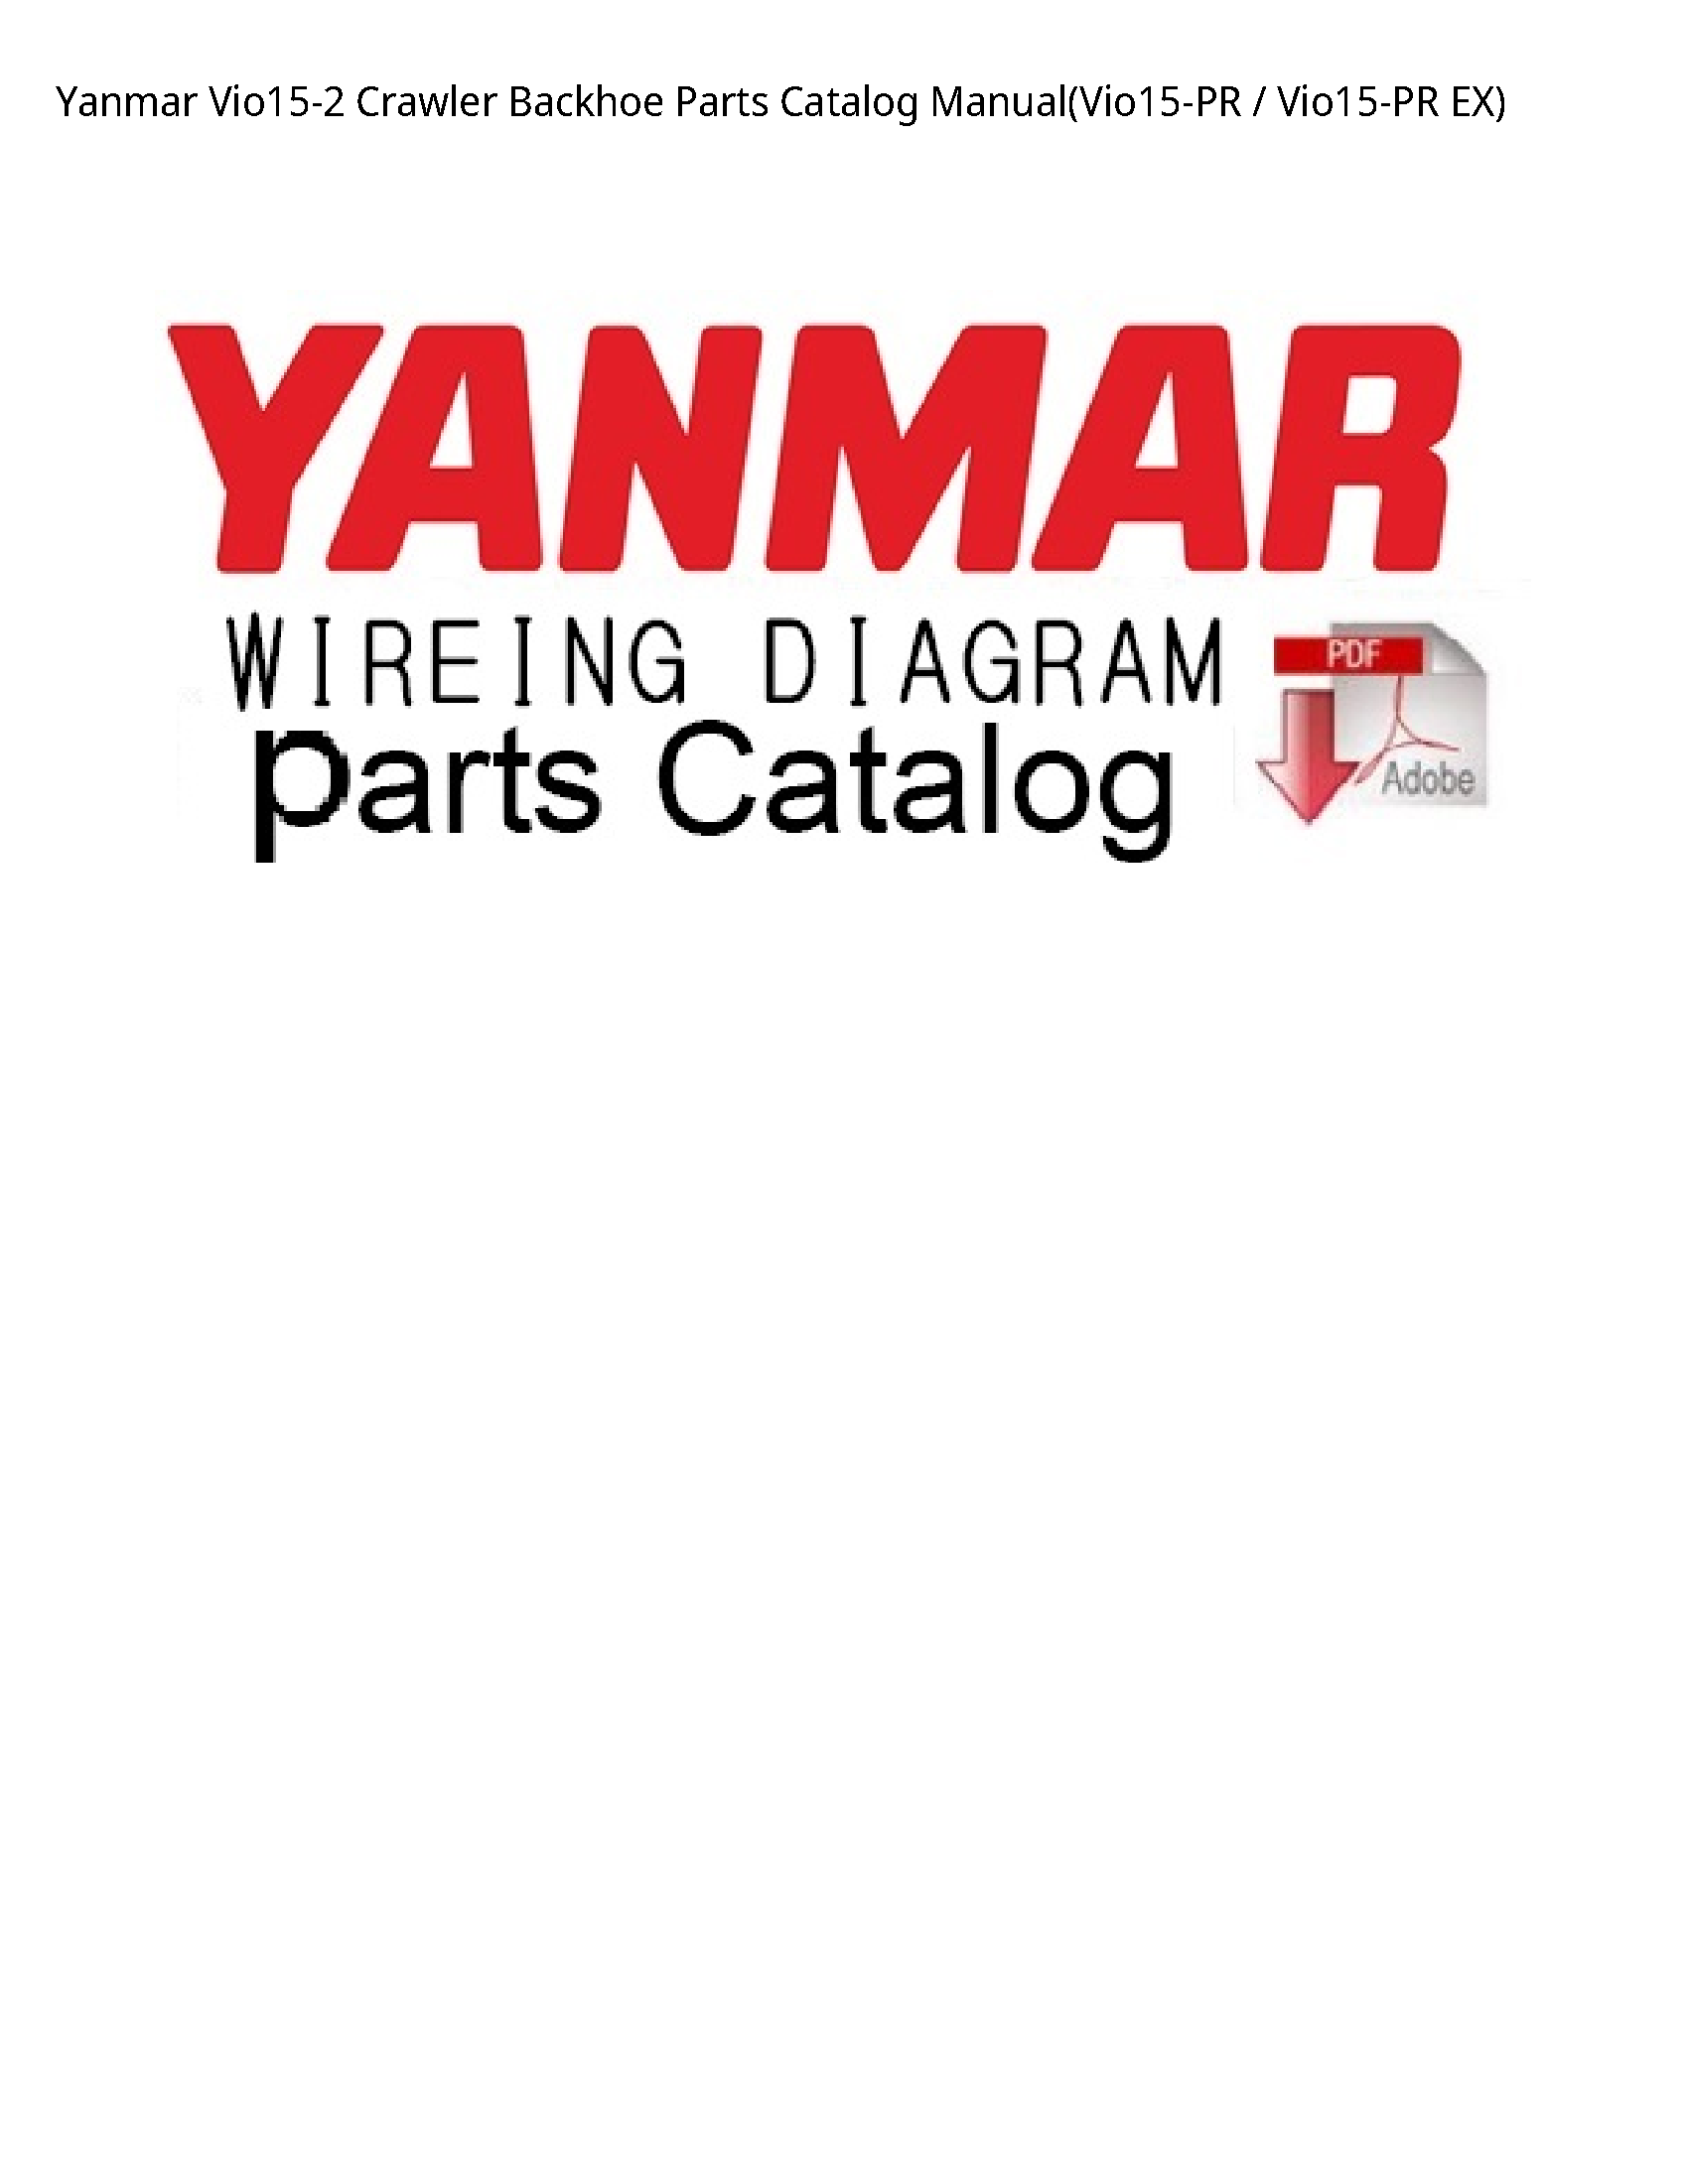 Yanmar Vio15-2 Crawler Backhoe Parts Catalog manual